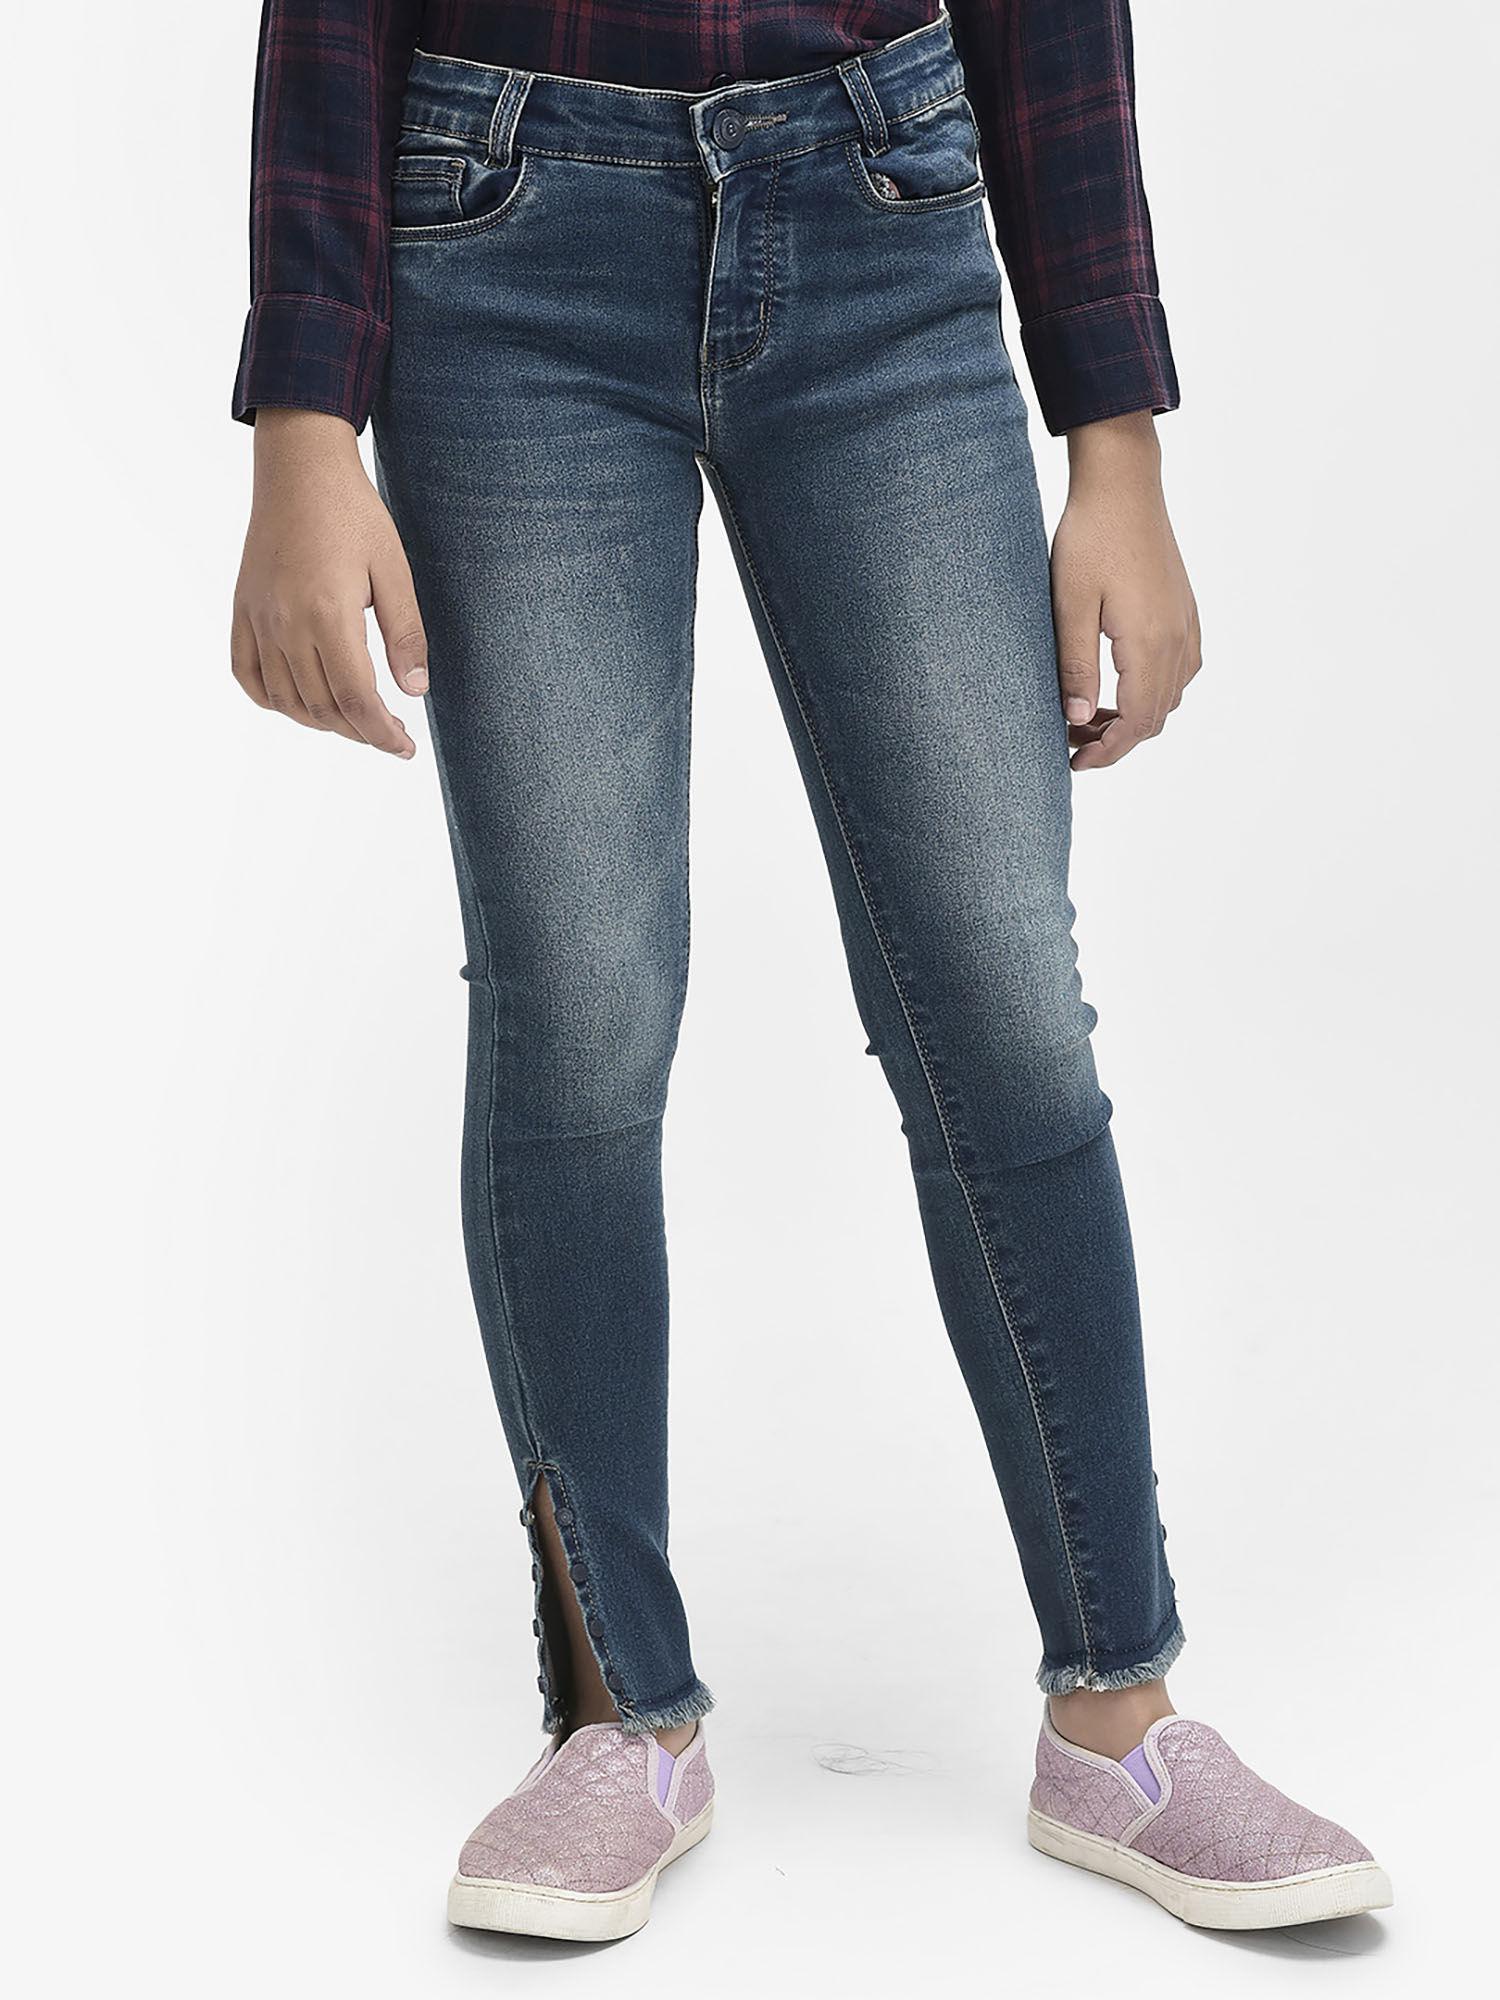 girls navy blue slit jeans